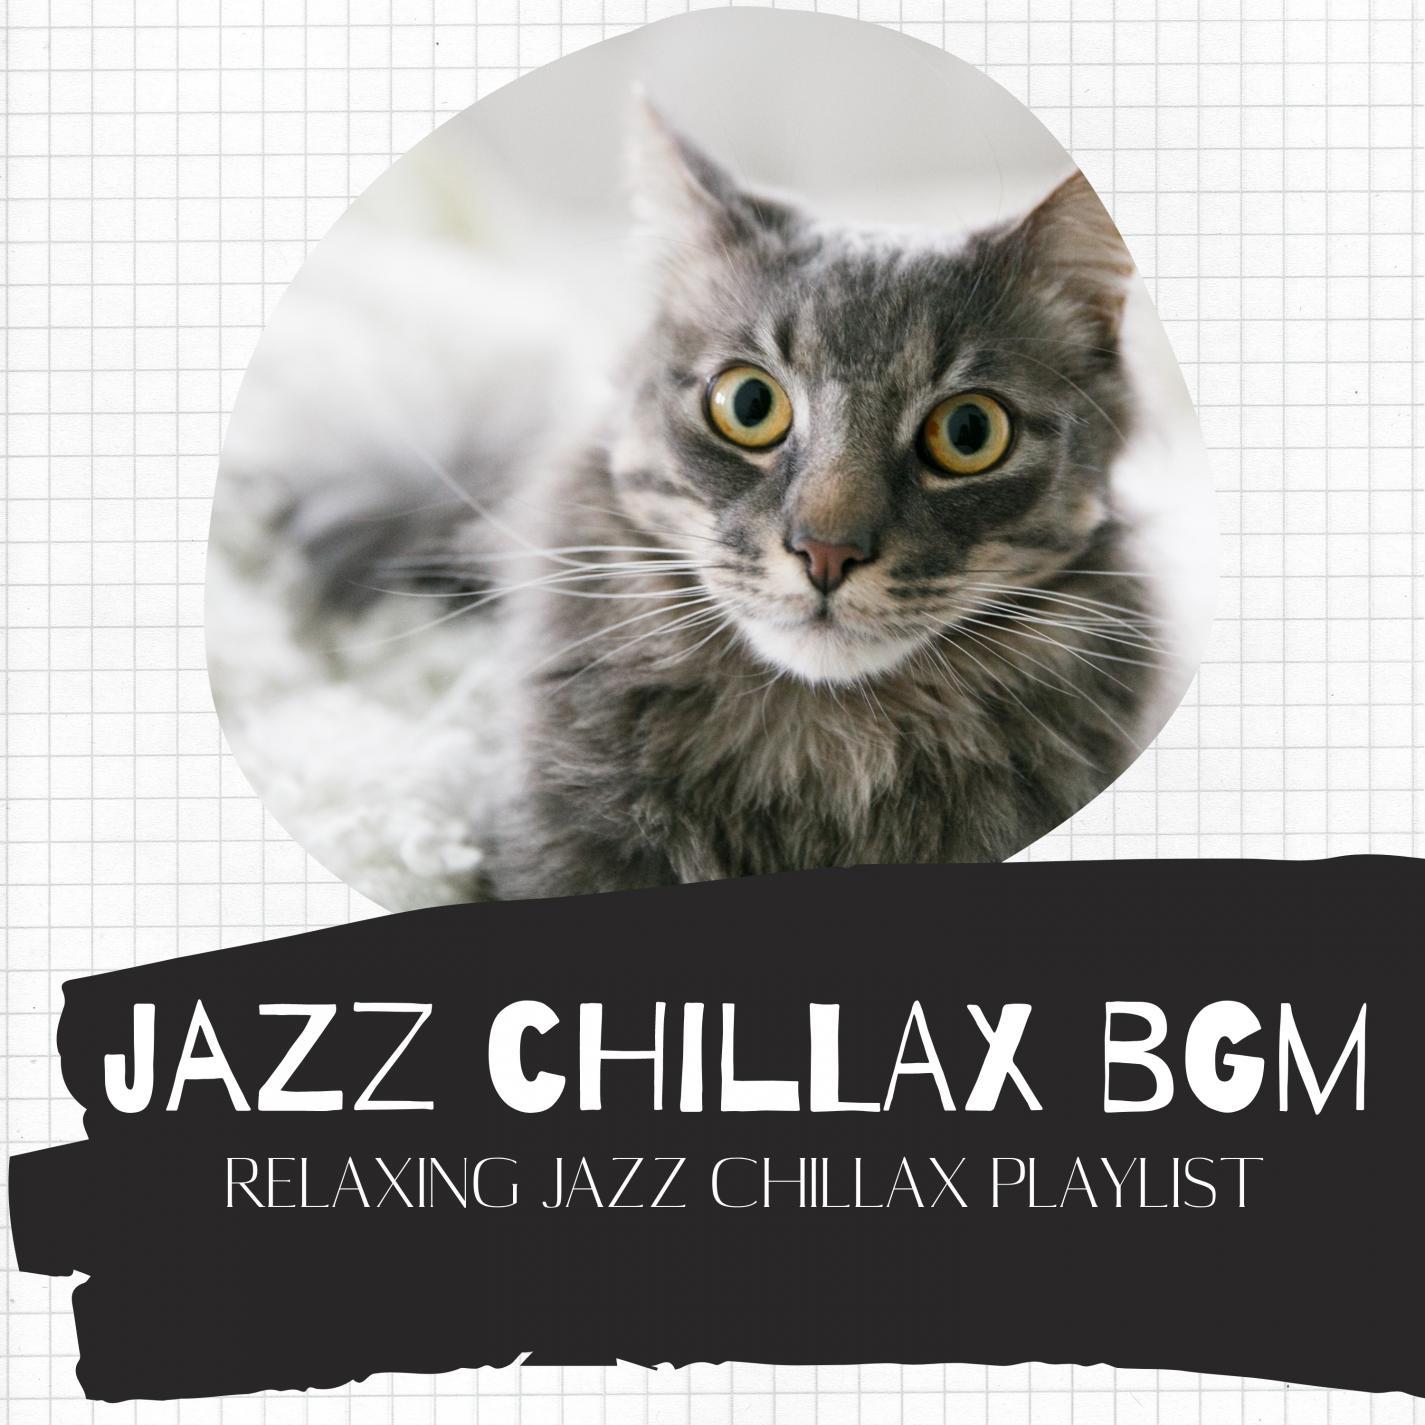 Relaxing Jazz Chillax Playlist